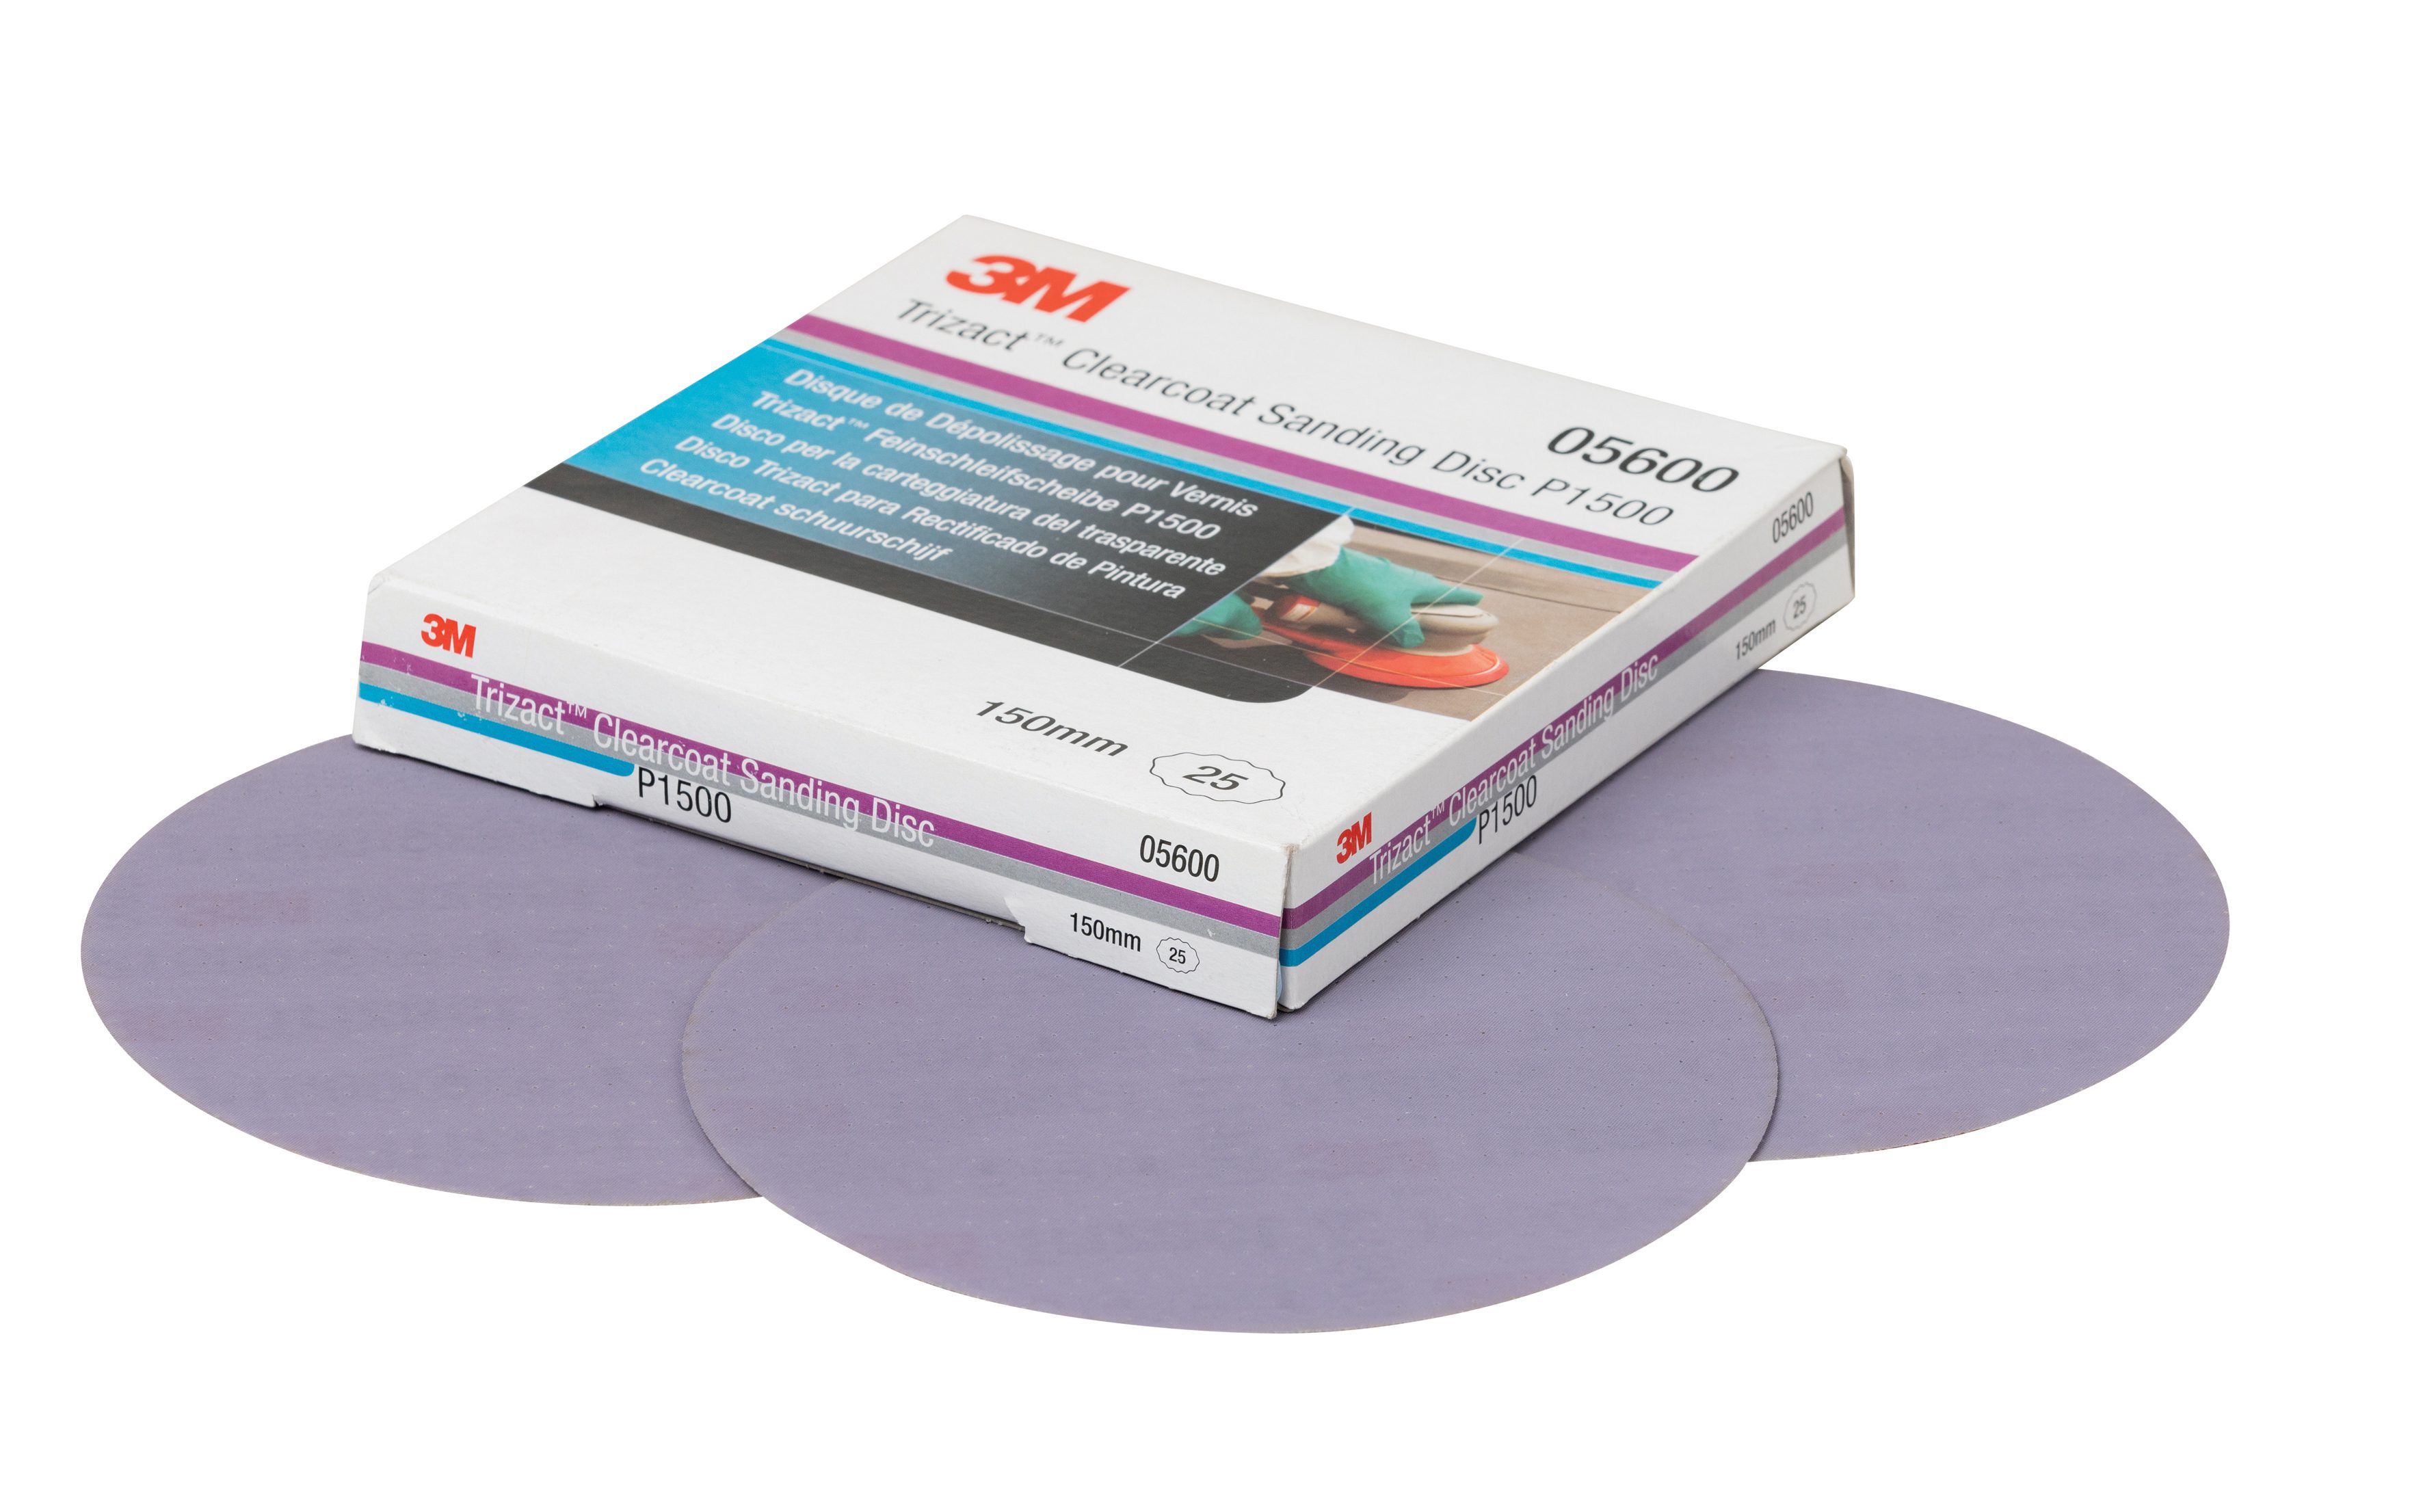 3M Trizact Clear Coat Sanding Discs P1500 (25) - 75mm